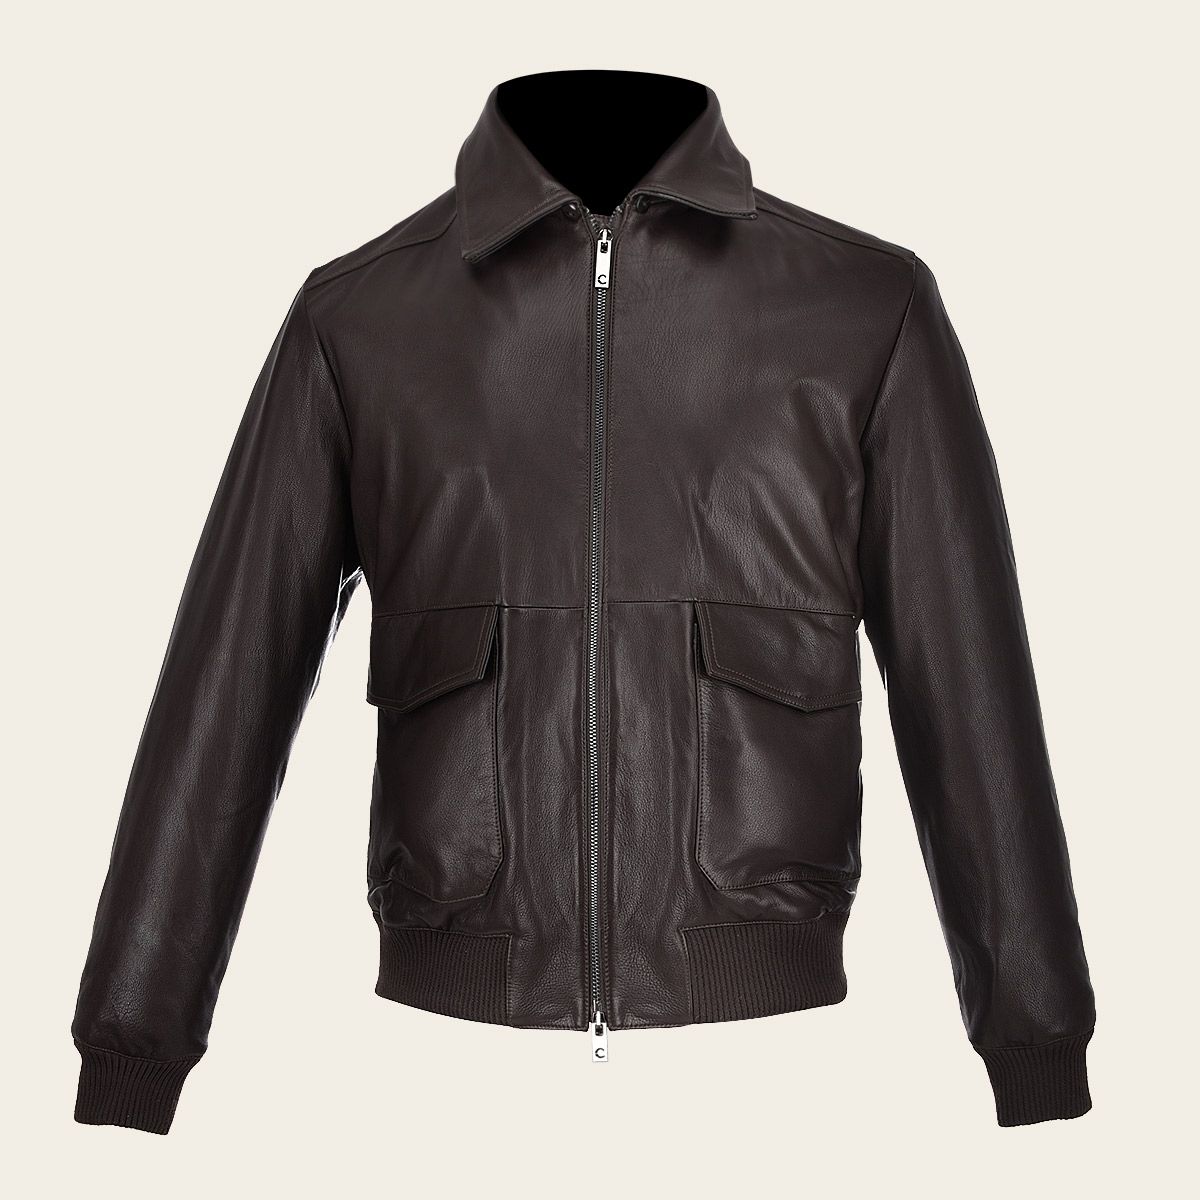 HCHI008 - Cuadra brown dress casual fashion aviator leather jacket for men-Kuet.us - Cuadra Boots - Western Cowboy, Casual Fashion and Dress Boots